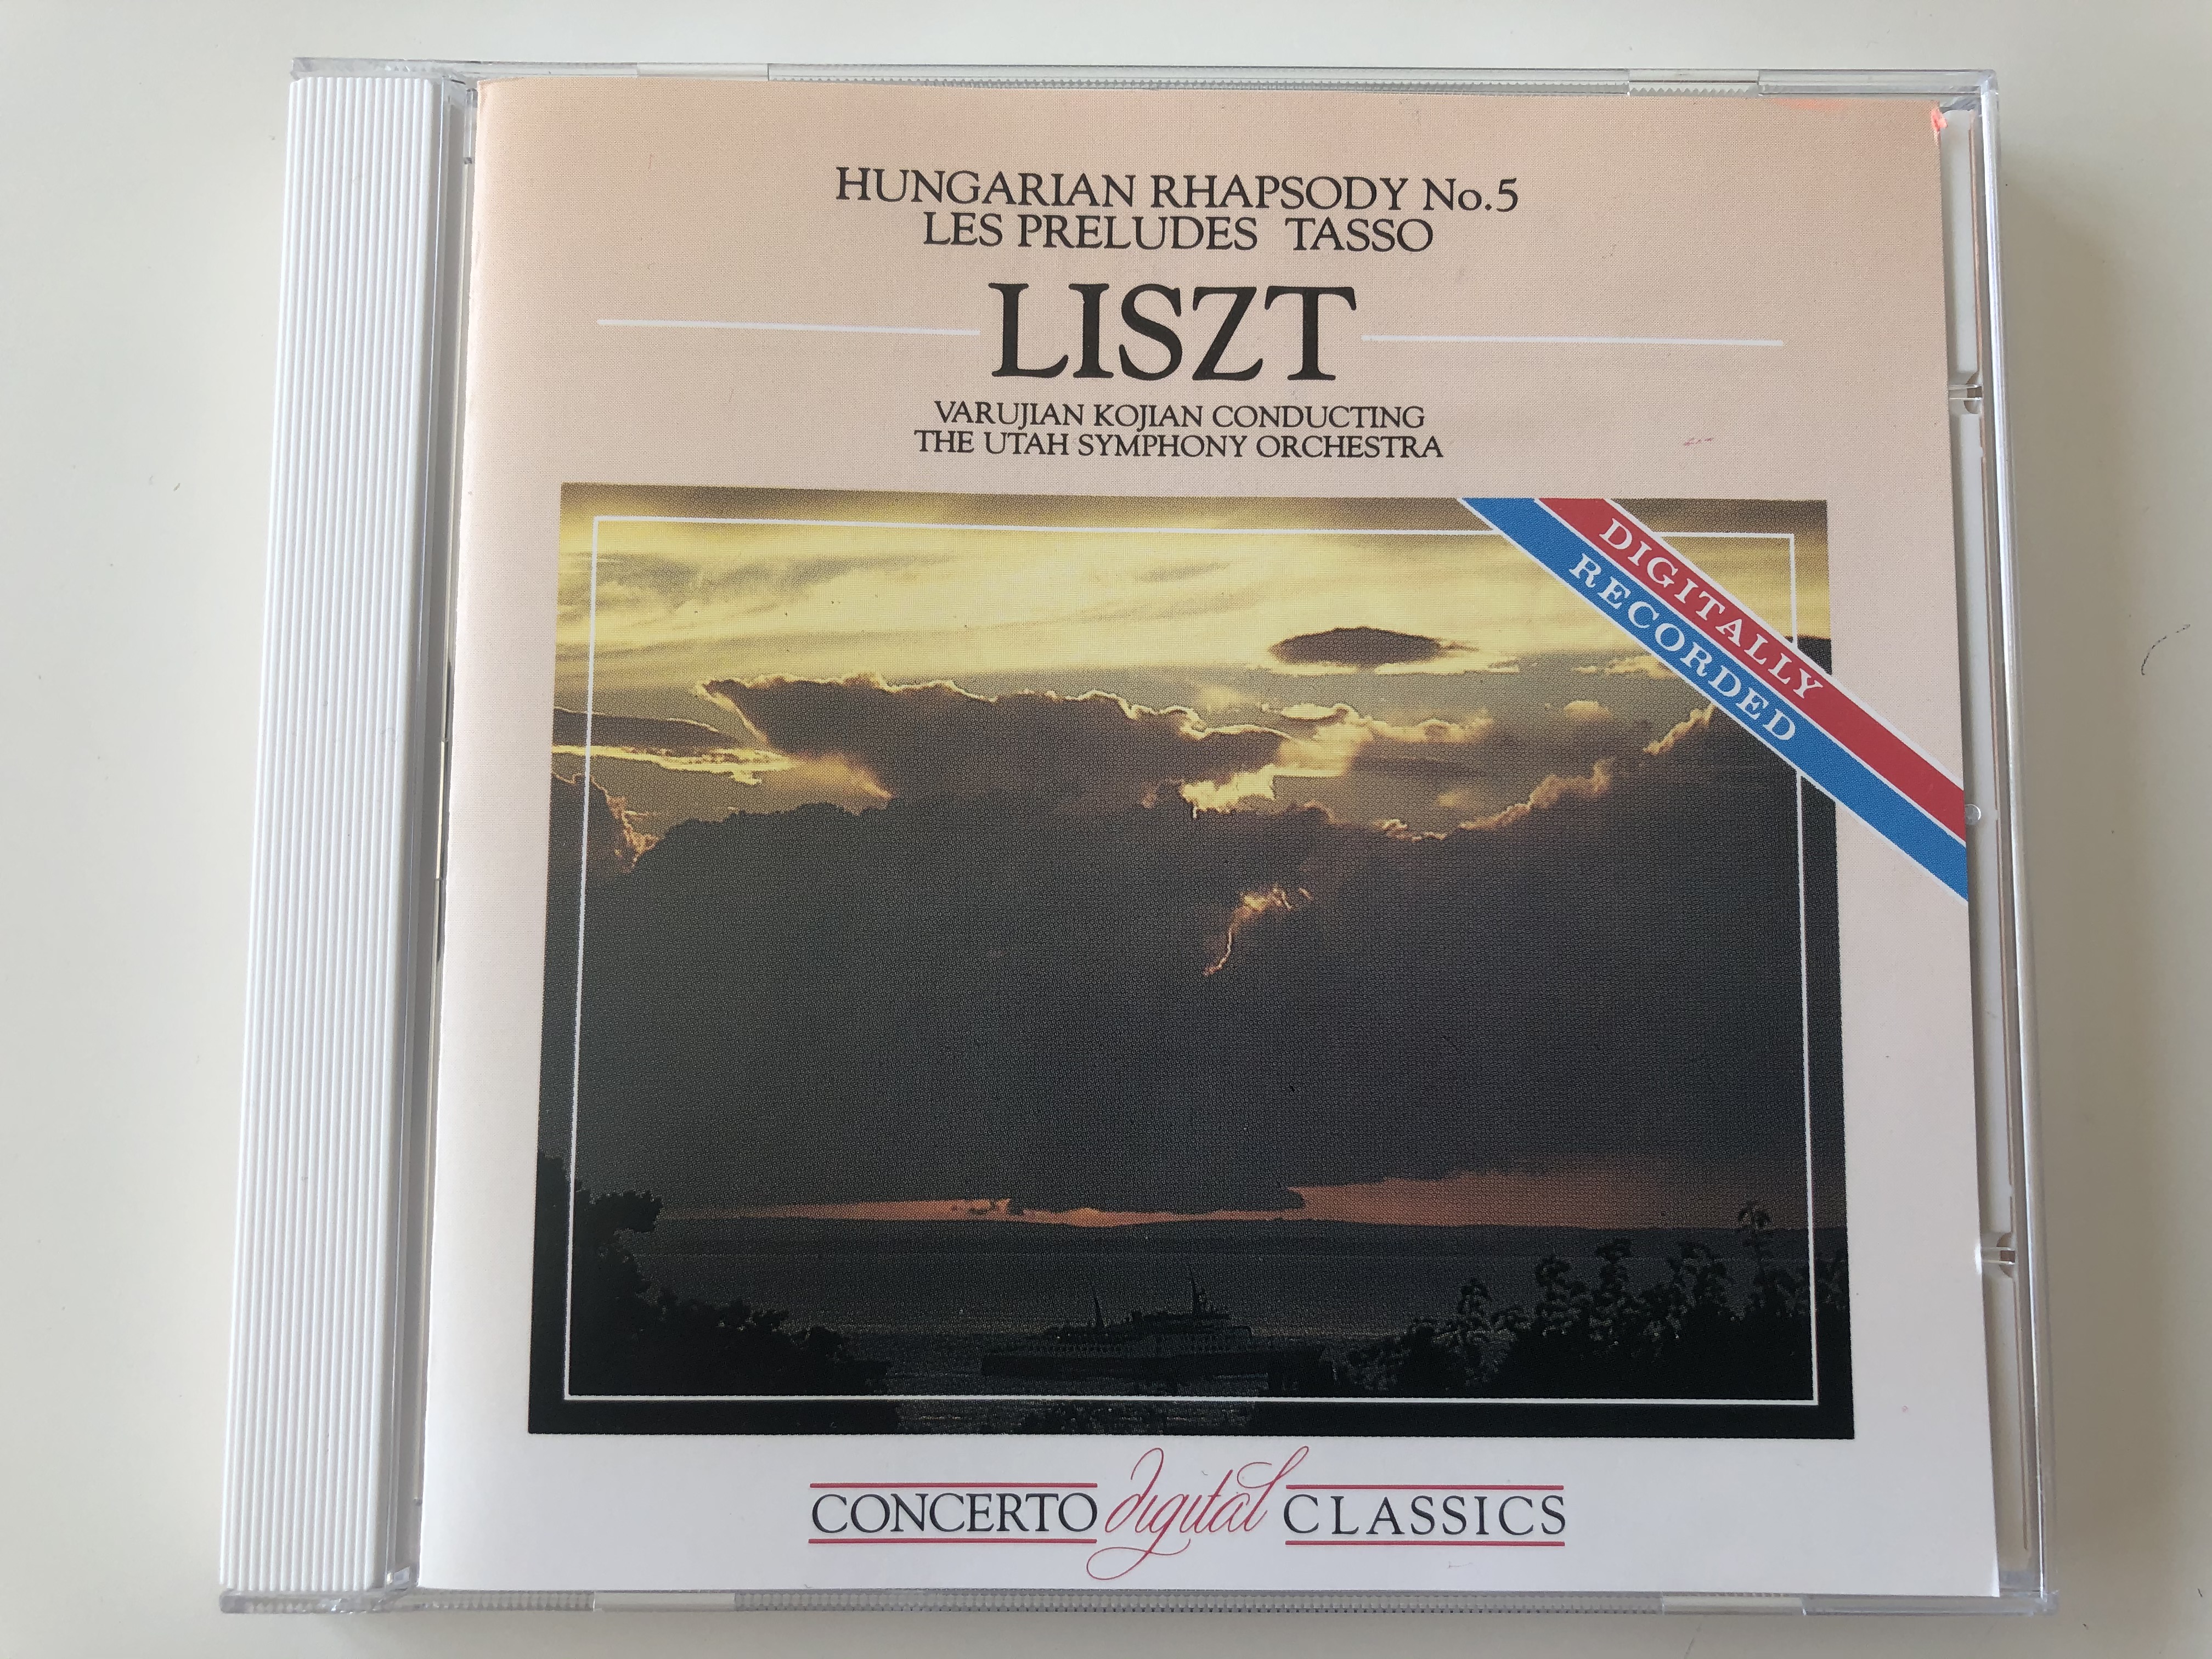 hungarian-rhapsody-no.-5-les-preludes-tasso-liszt-varujian-kojian-conducting-the-utah-symphony-orchestra-object-enterprises-ltd.-audio-cd-1989-oq0052-1-.jpg